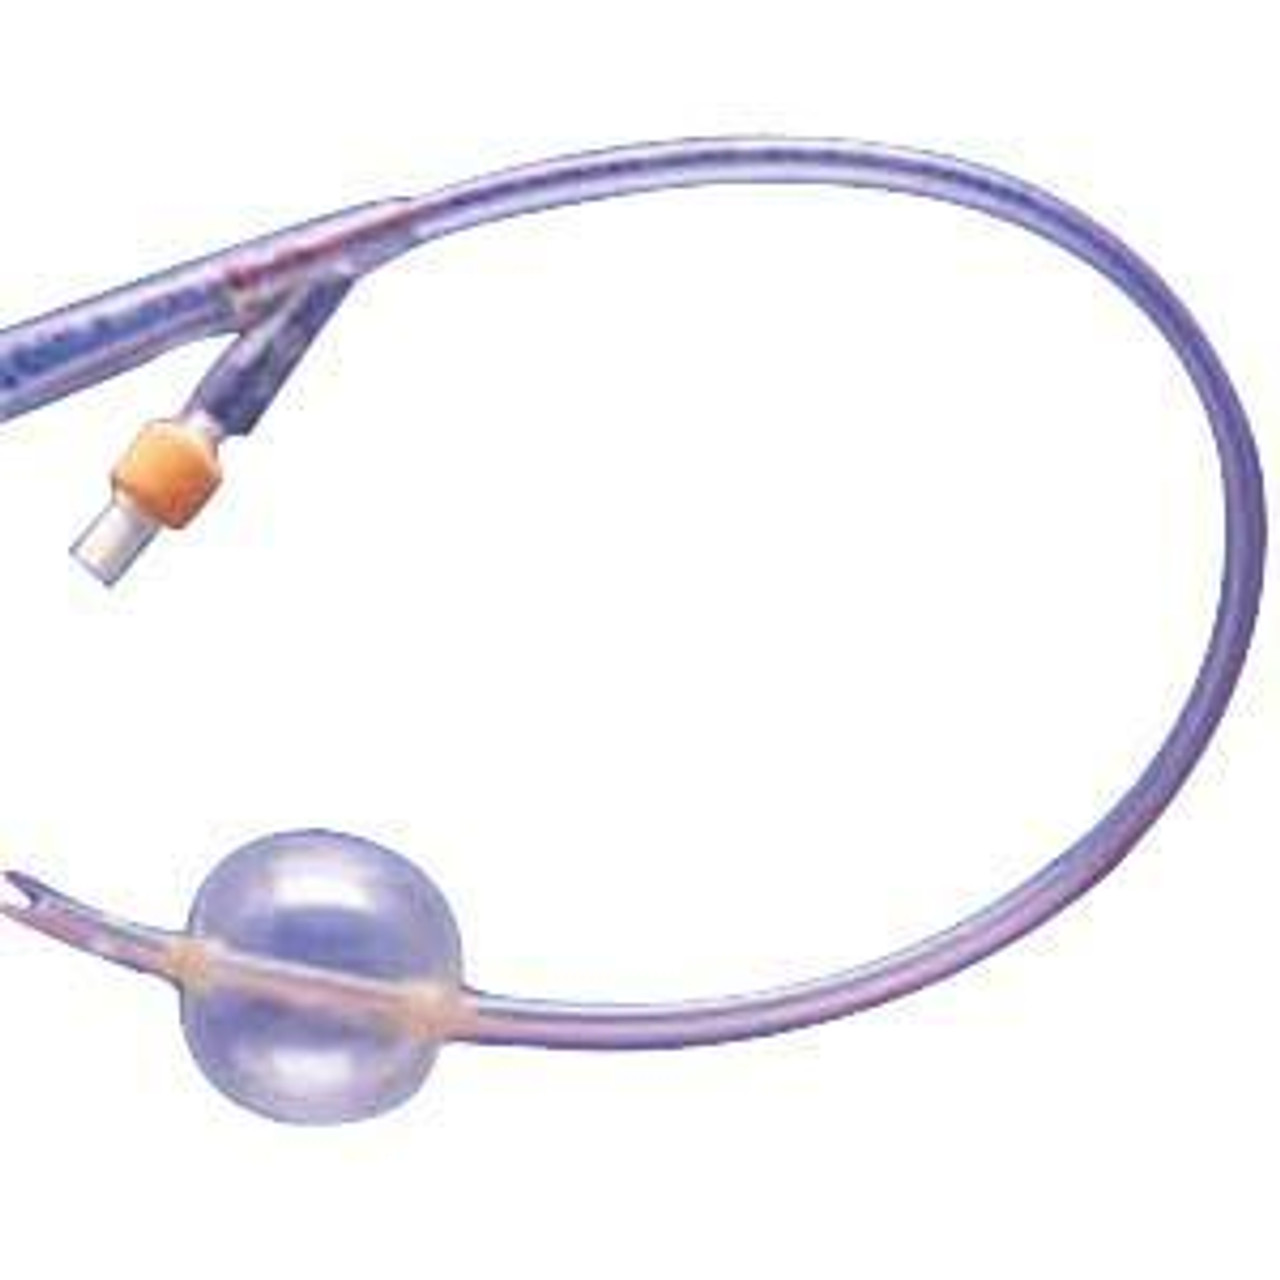 Soft Simplastic 2-Way Foley Catheter 22 fr 30cc-SP BX/10 (RUS-442622) (RUS-442622)